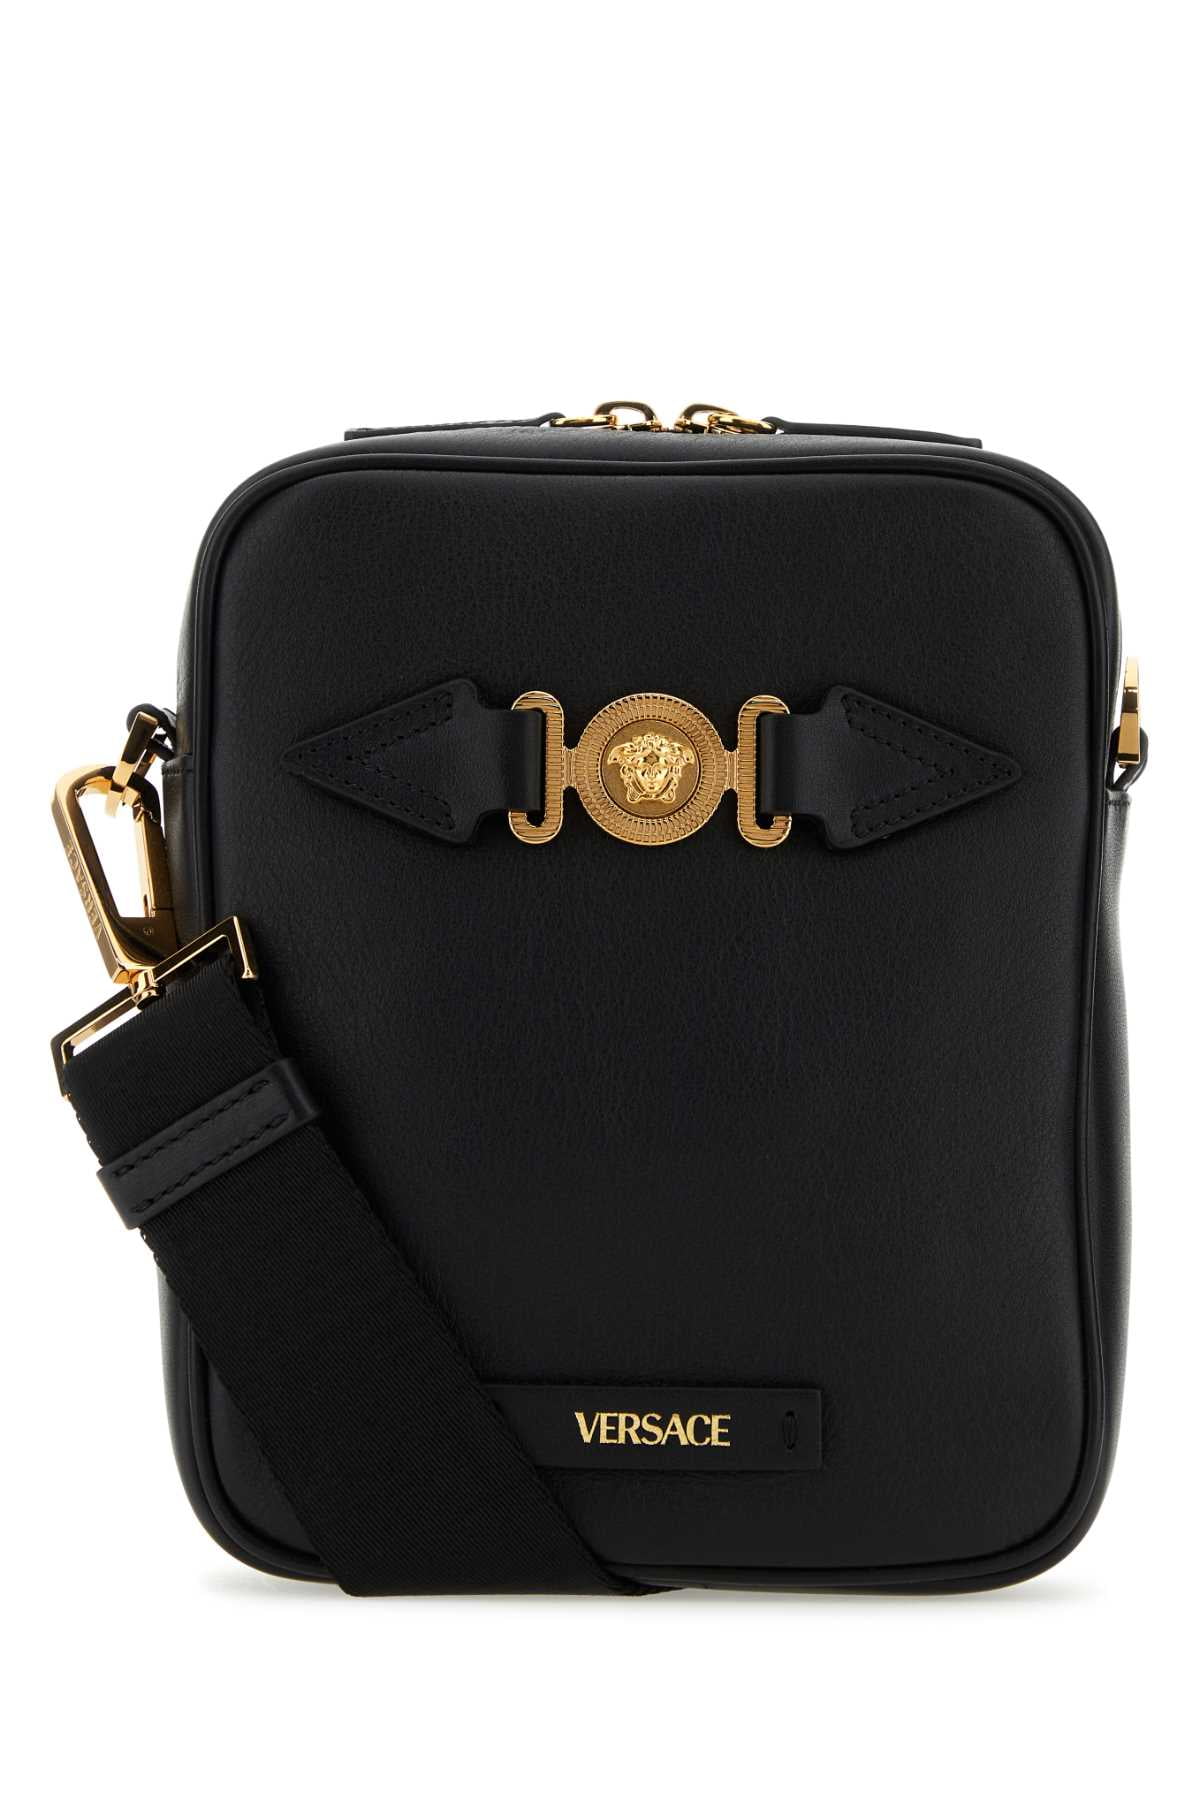 Versace Medusa Biggie Small Crossbody Bag for Men